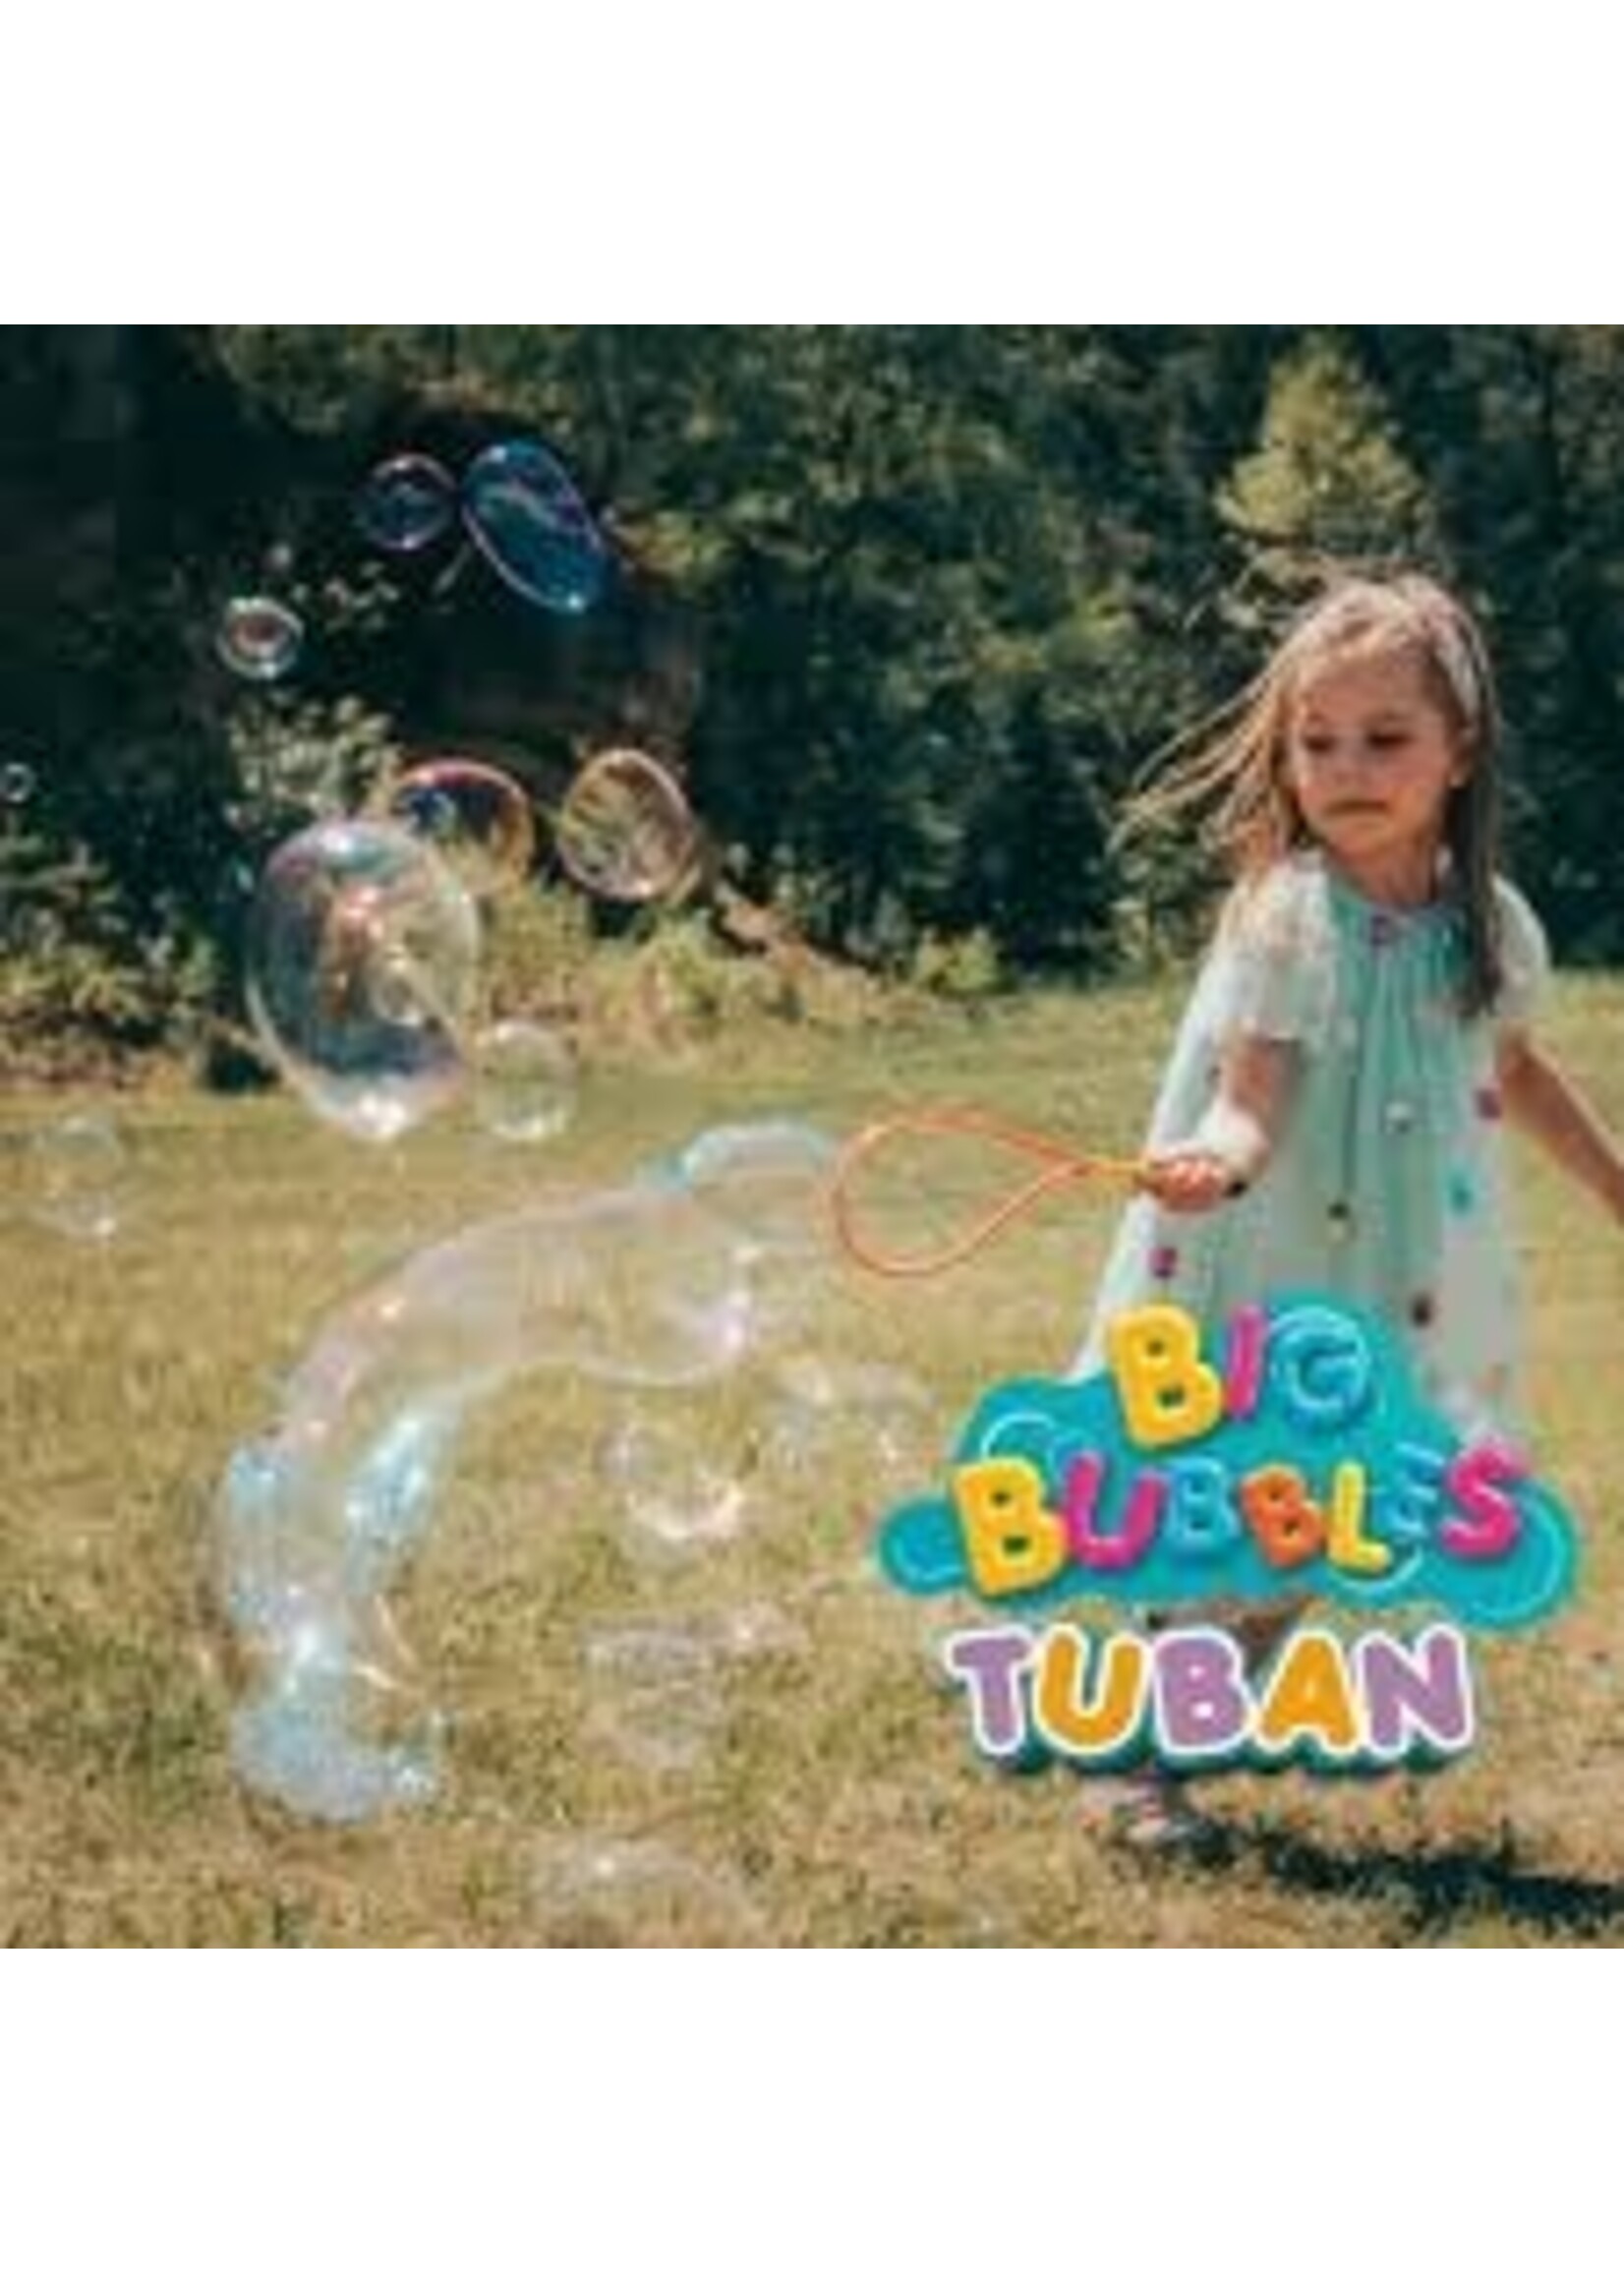 Tuban Big bubbles soap bubble ring